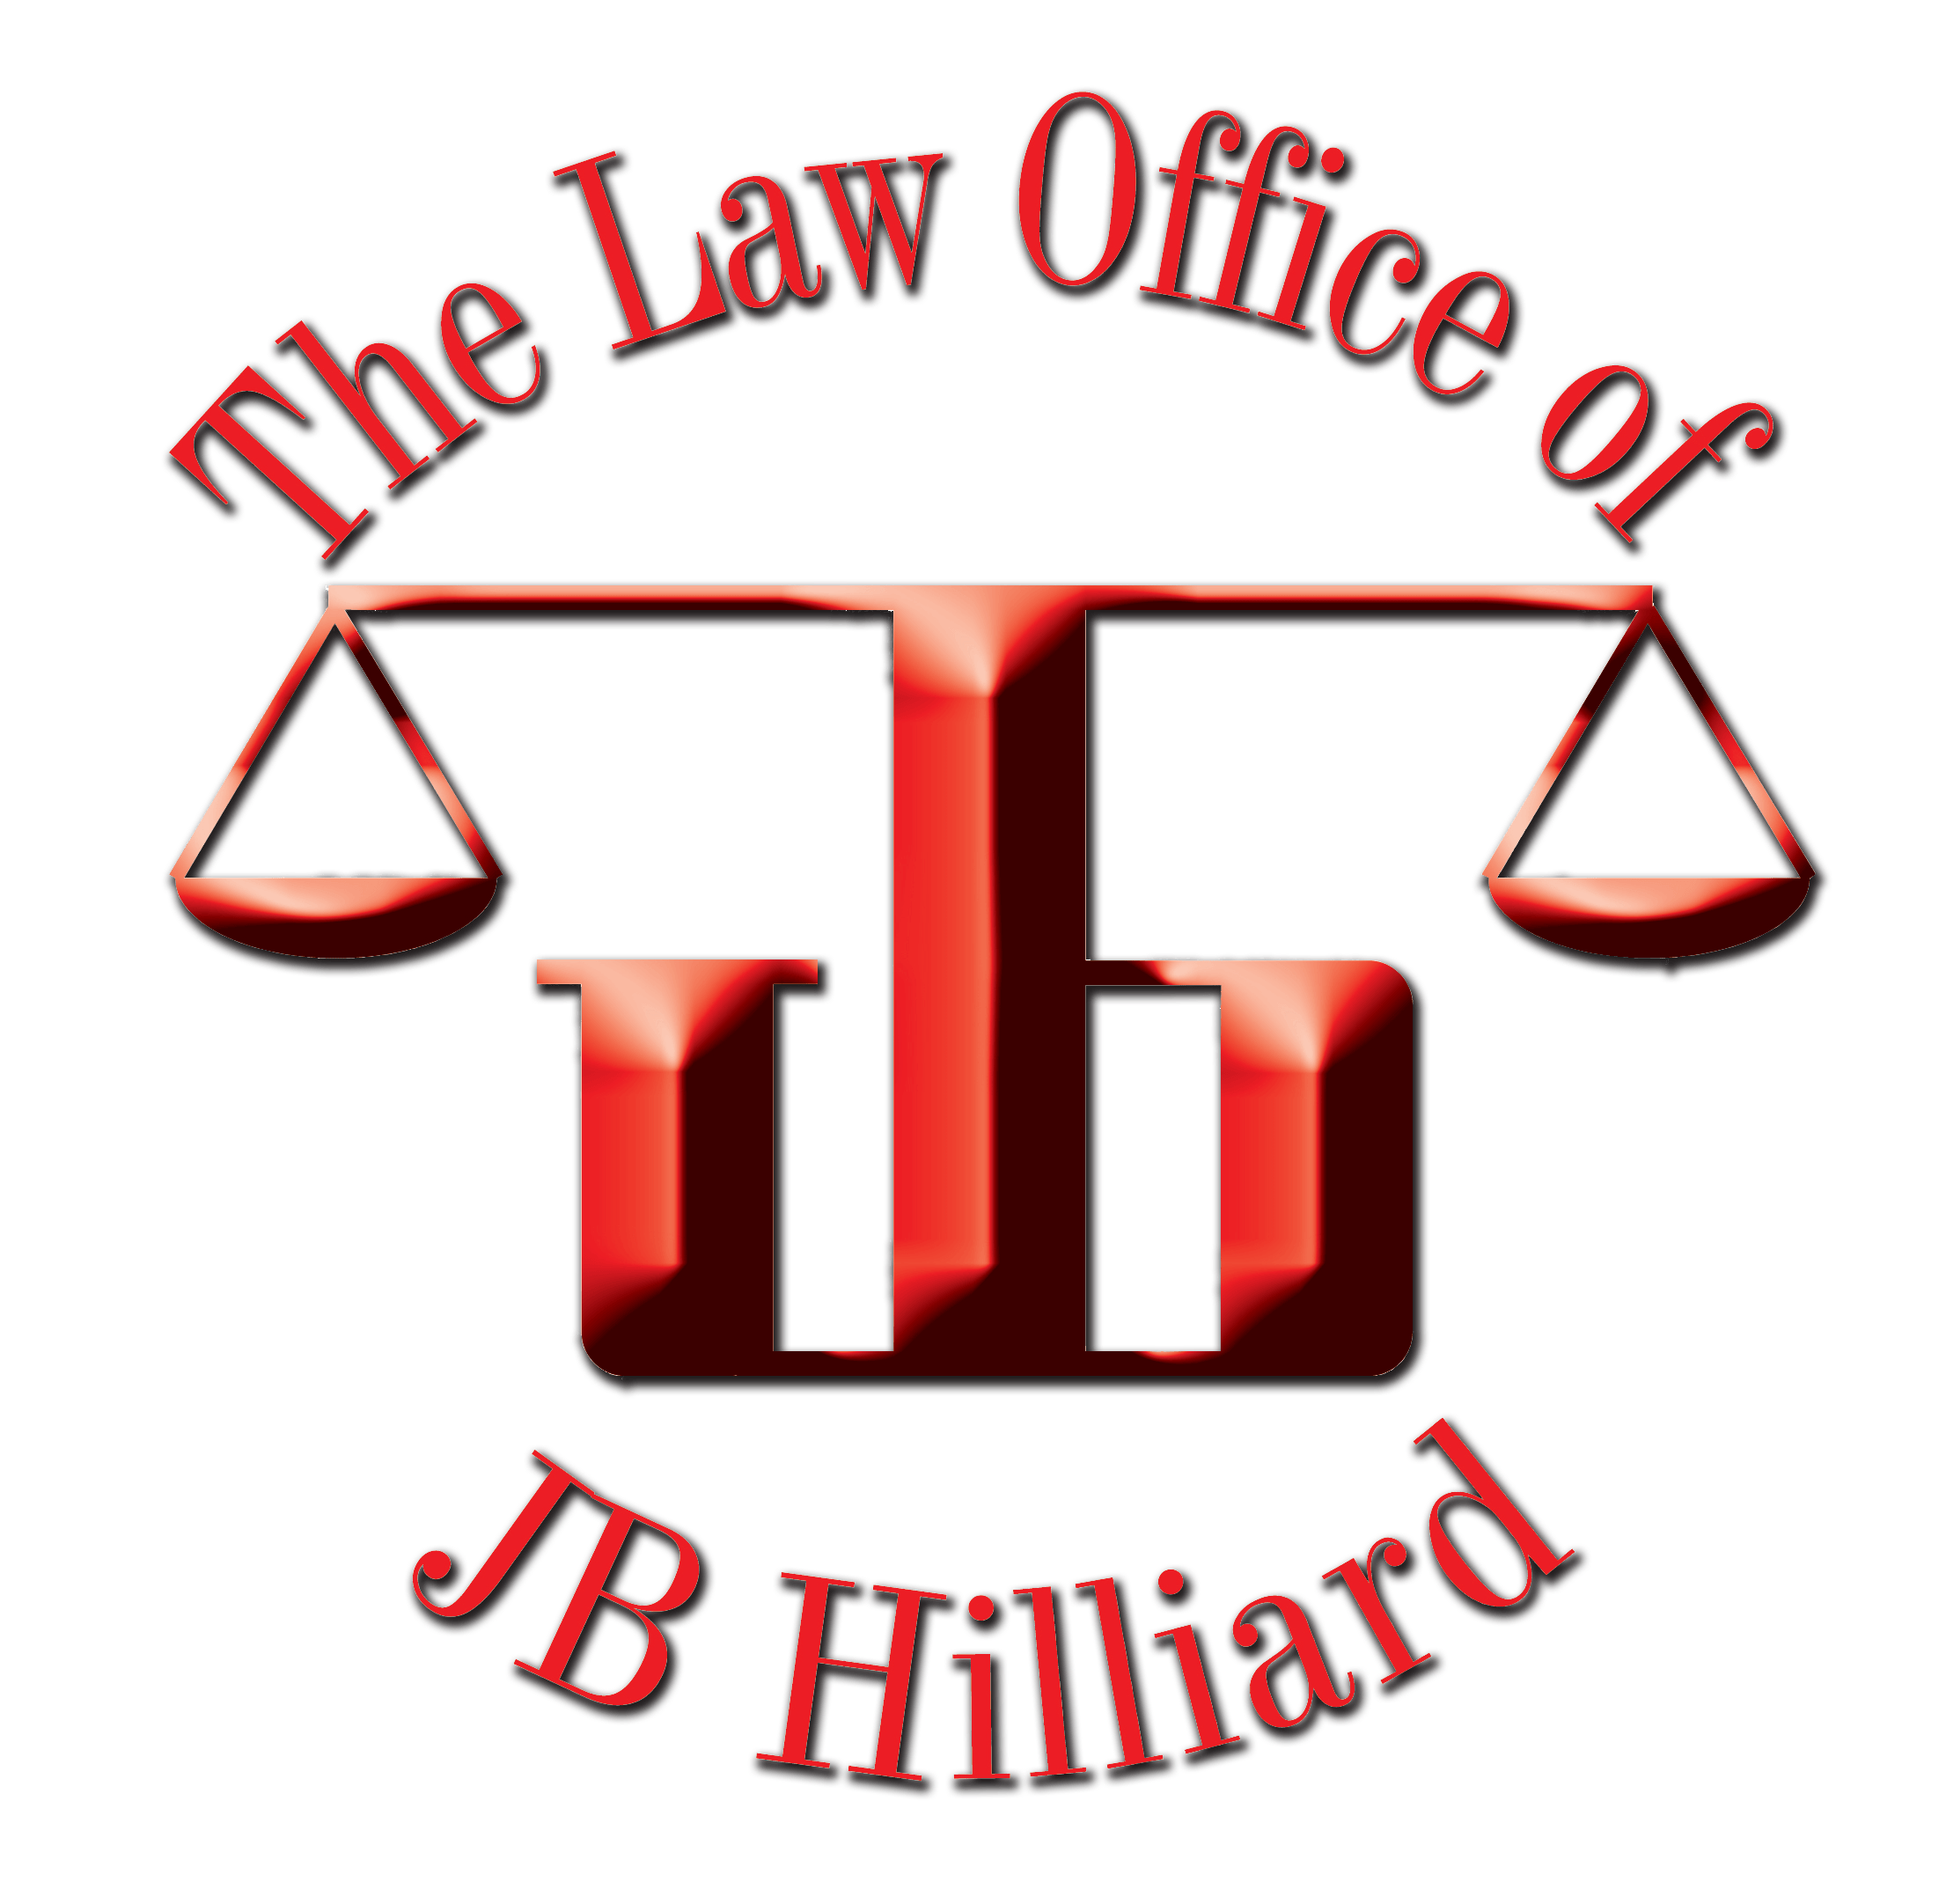 Red Law Logo - JBLaw – The Law Office of JB Hilliard, LLC